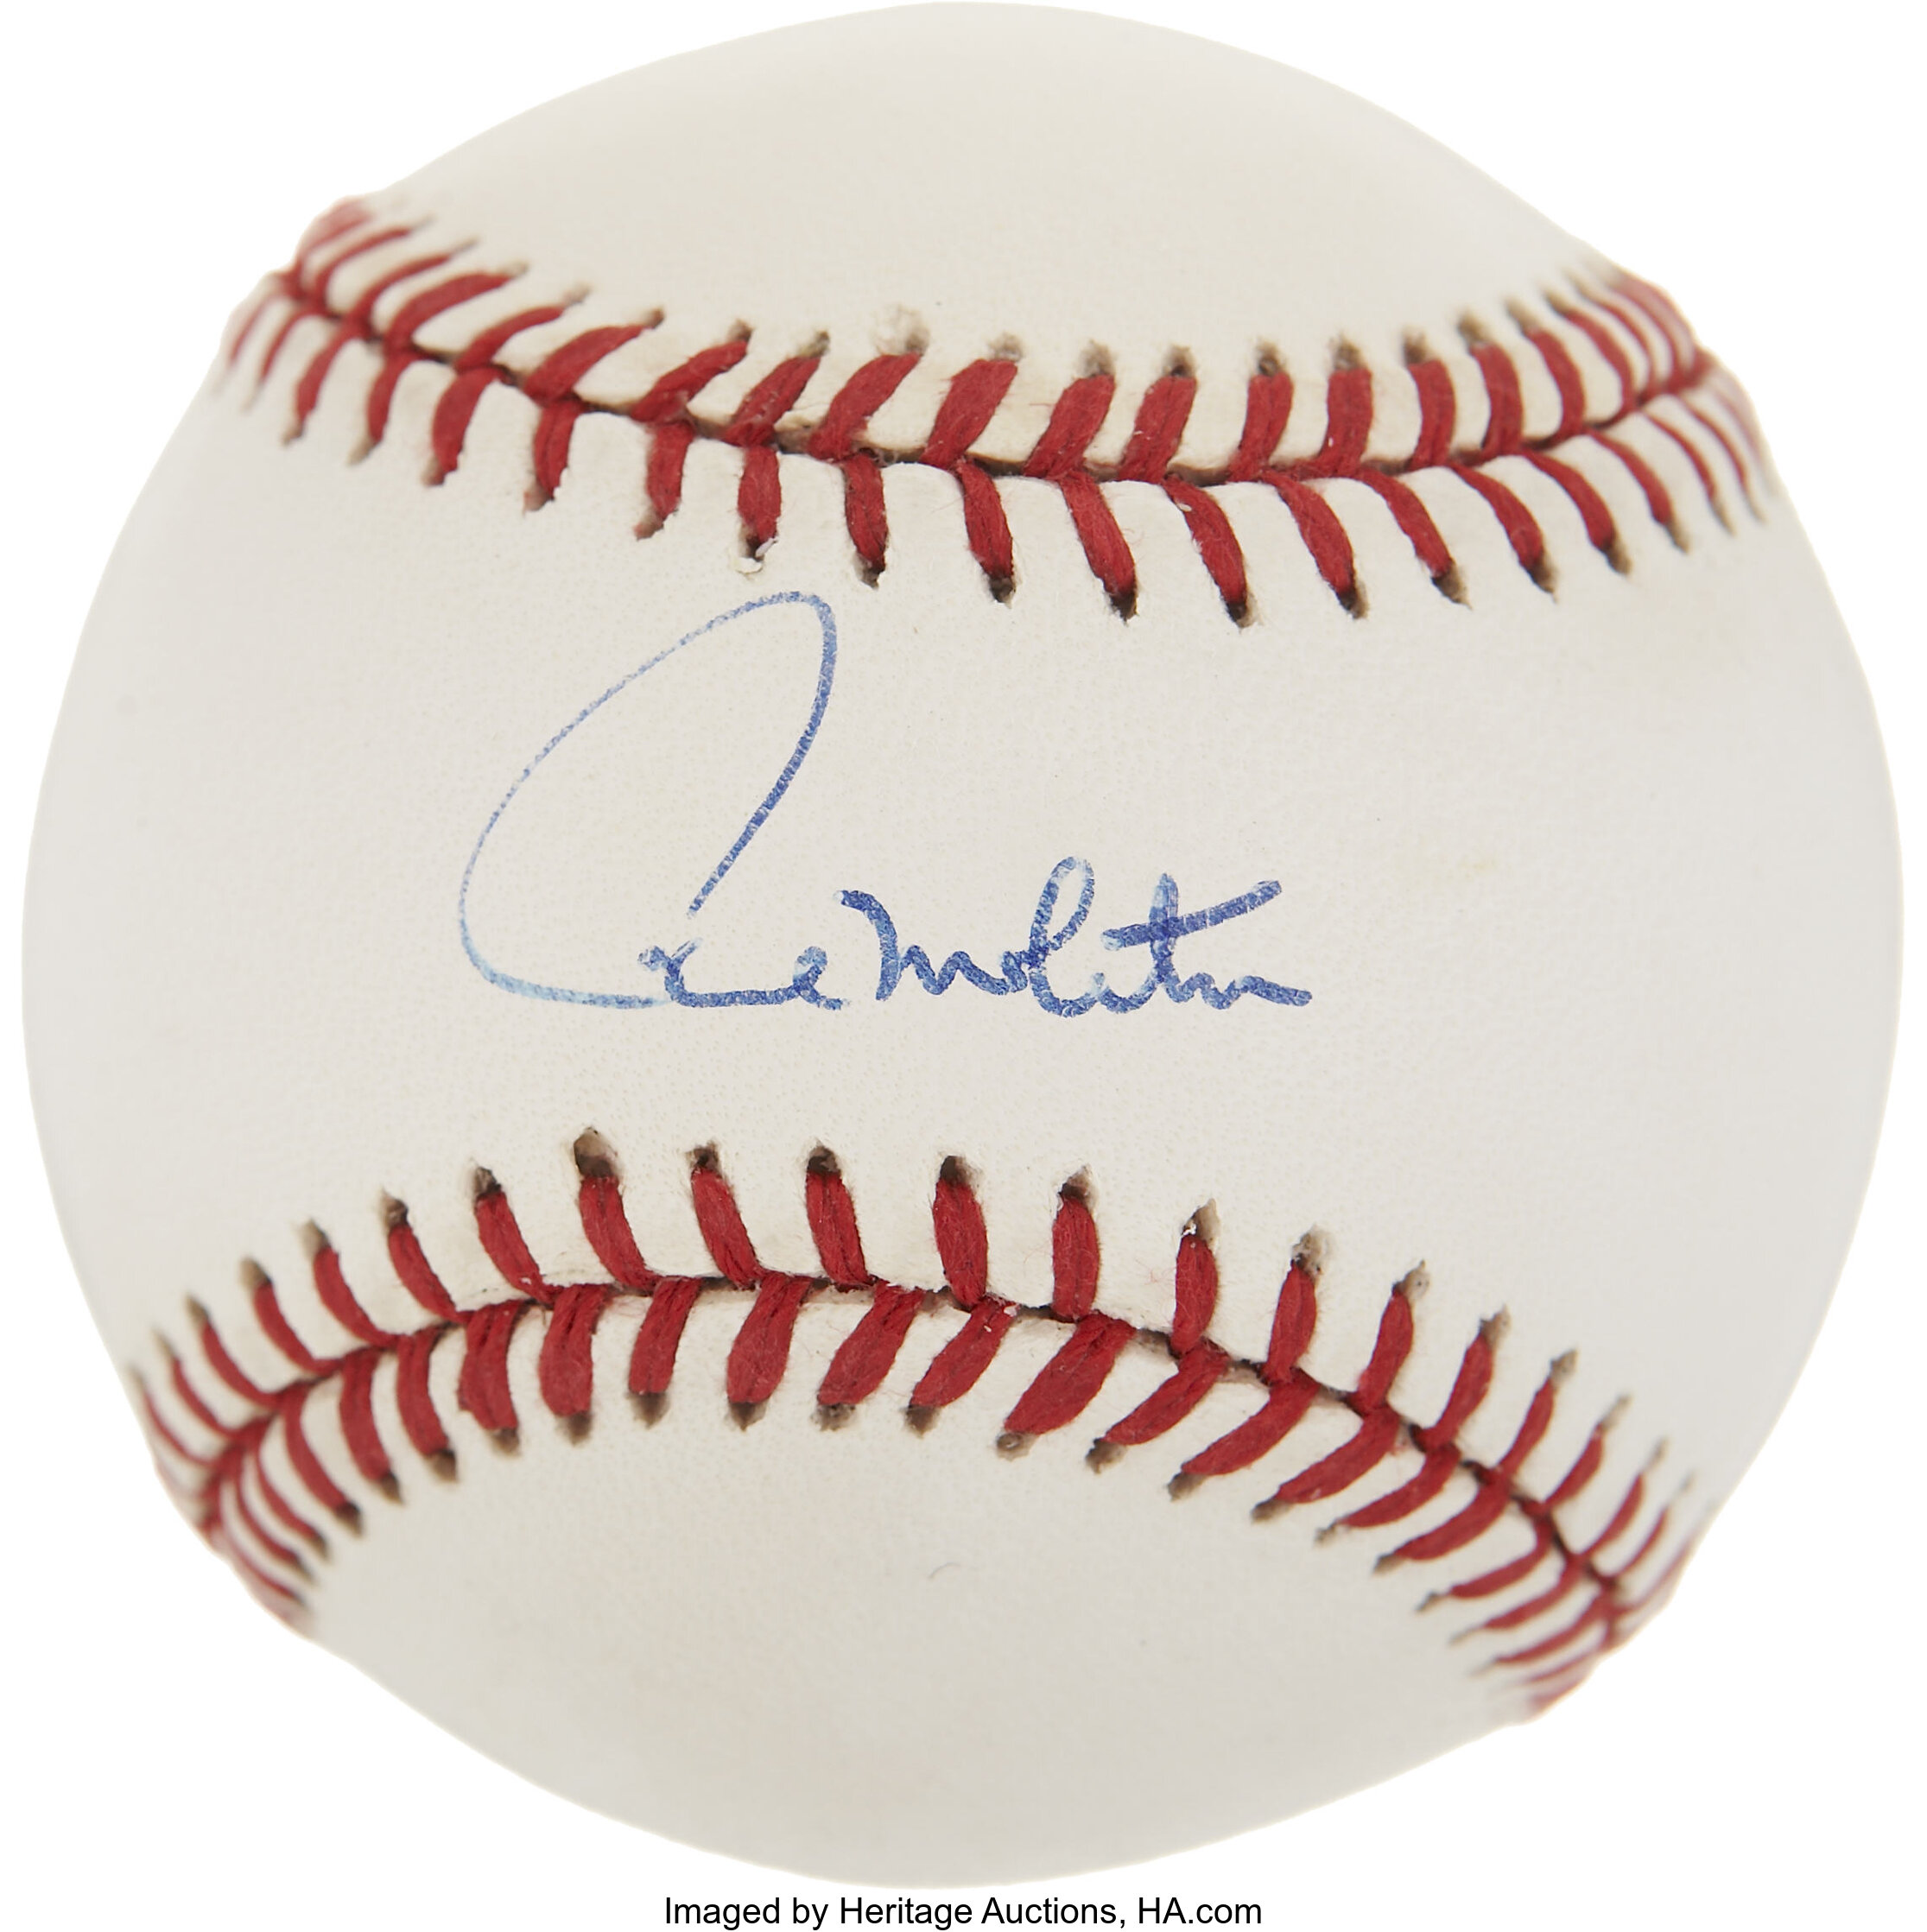 Paul Molitor Autographed Baseball.  Autographs Baseballs